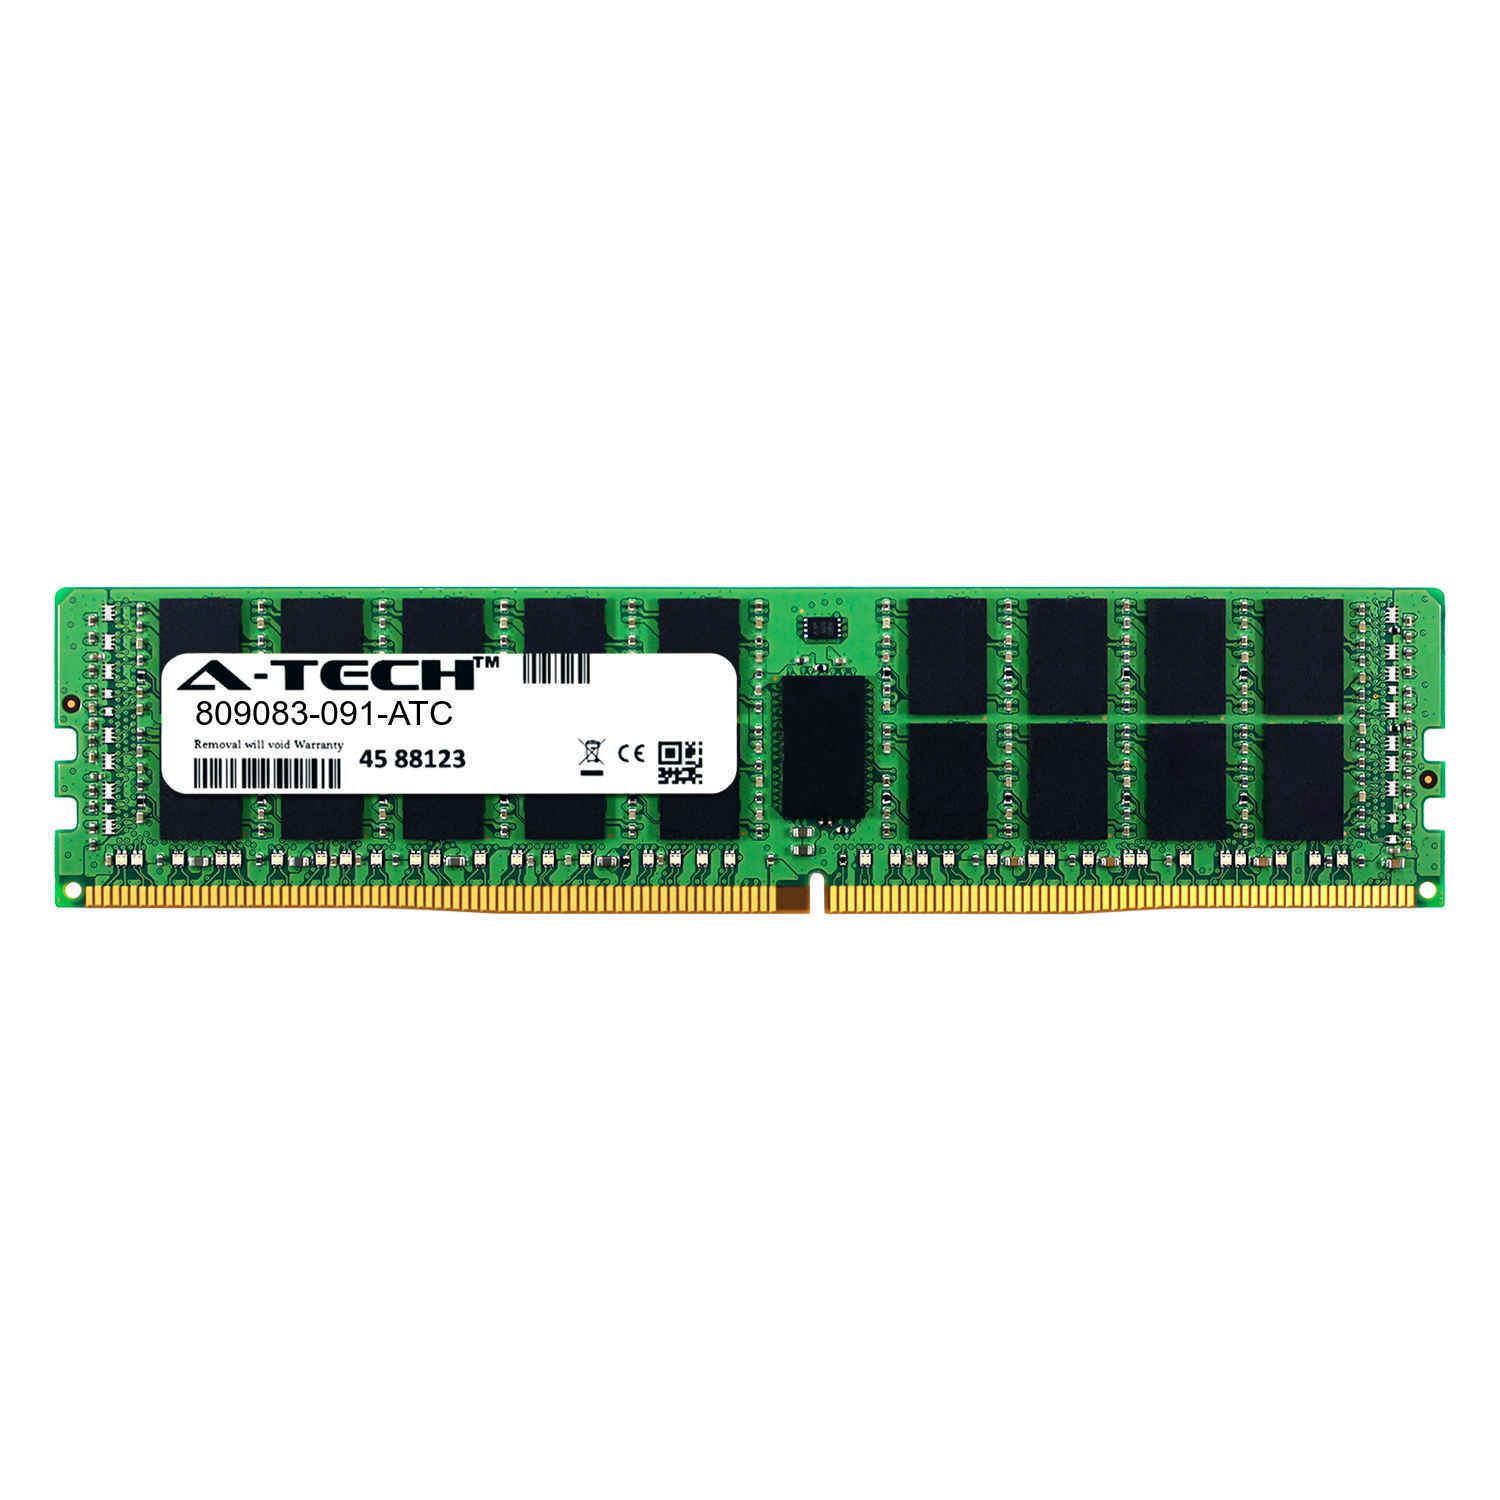 32GB DDR4 2400MHz PC4-19200R RDIMM (HP 809083-091 Equivalent) Server Memory RAM